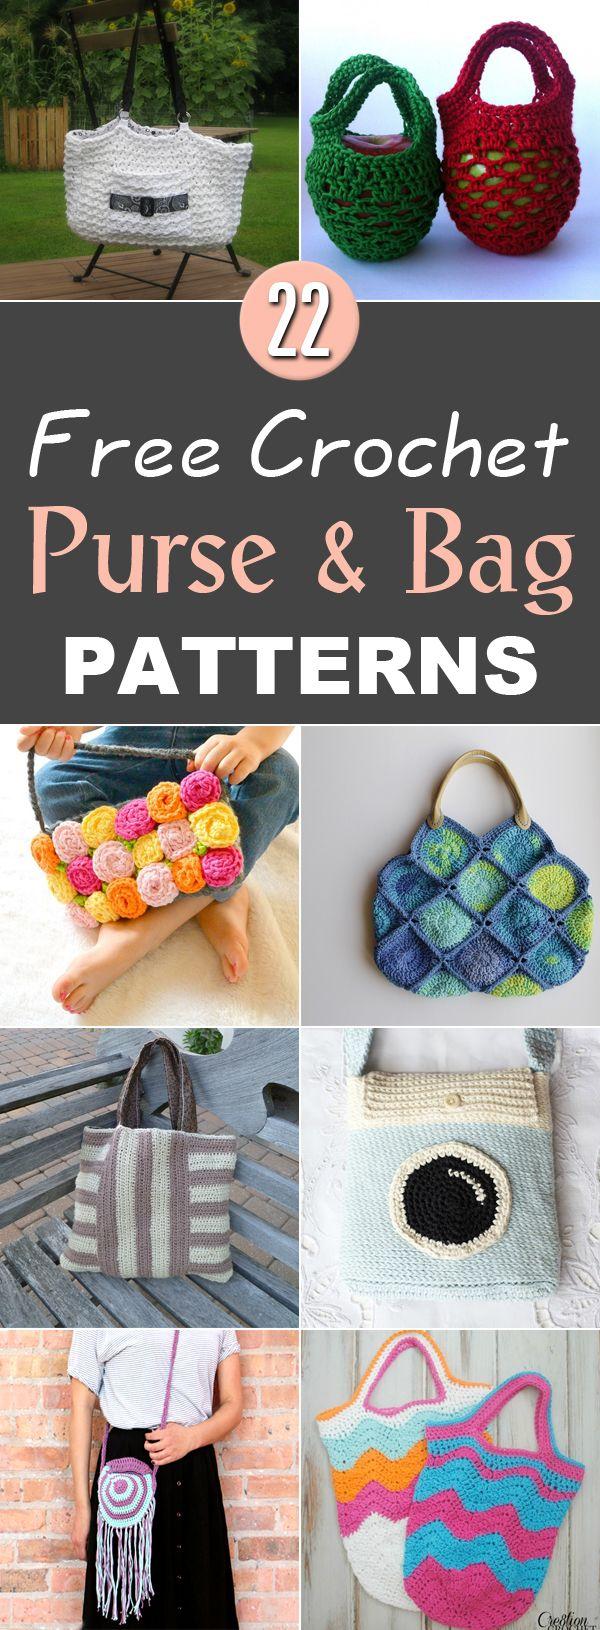 Wedding - 22 Free Crochet Purse & Bag Patterns